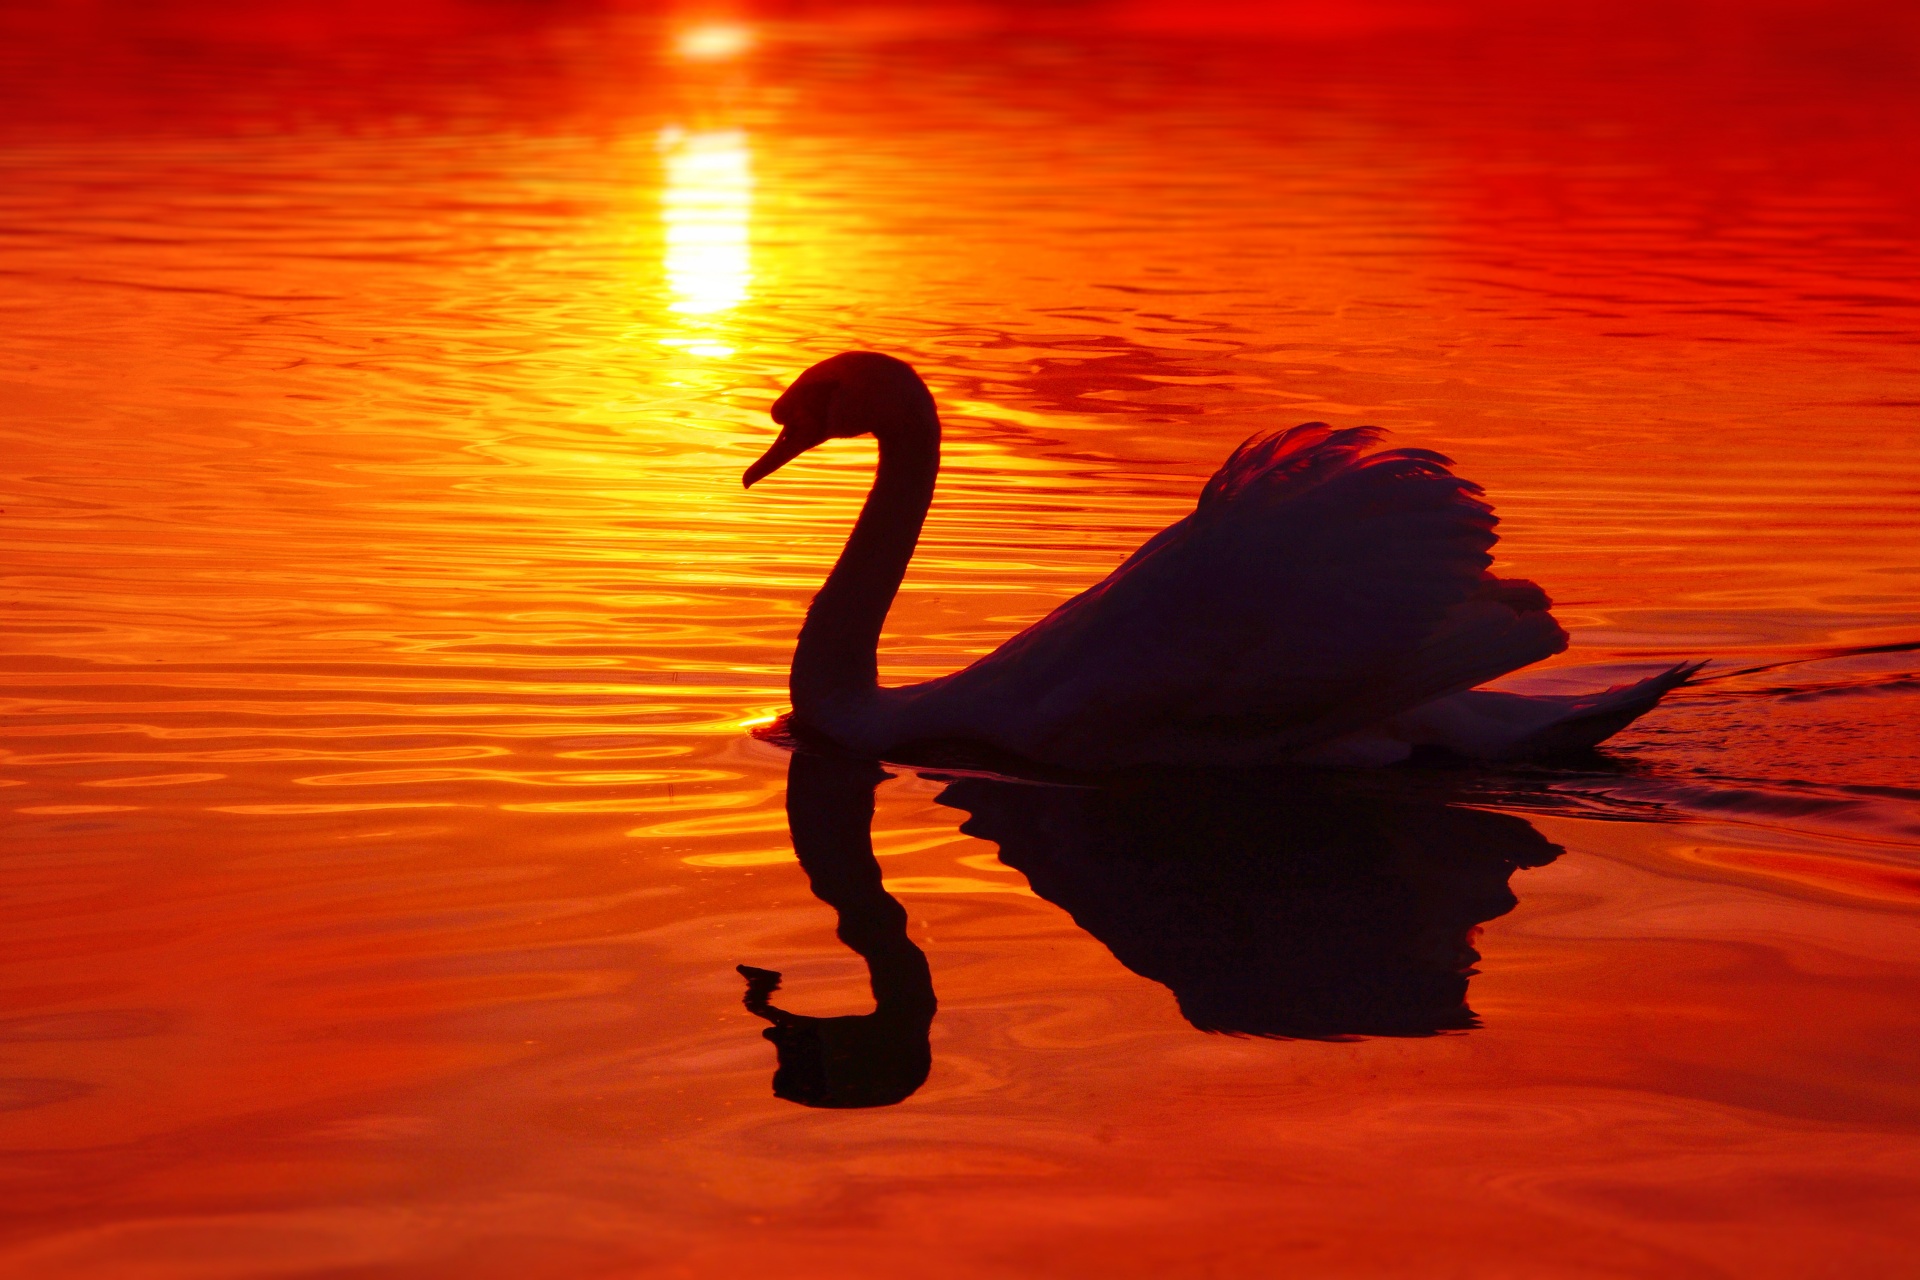 Swan sunset red water lake reflection reflection body of water sunset glow silhouette atmospheric romantic art bird nature